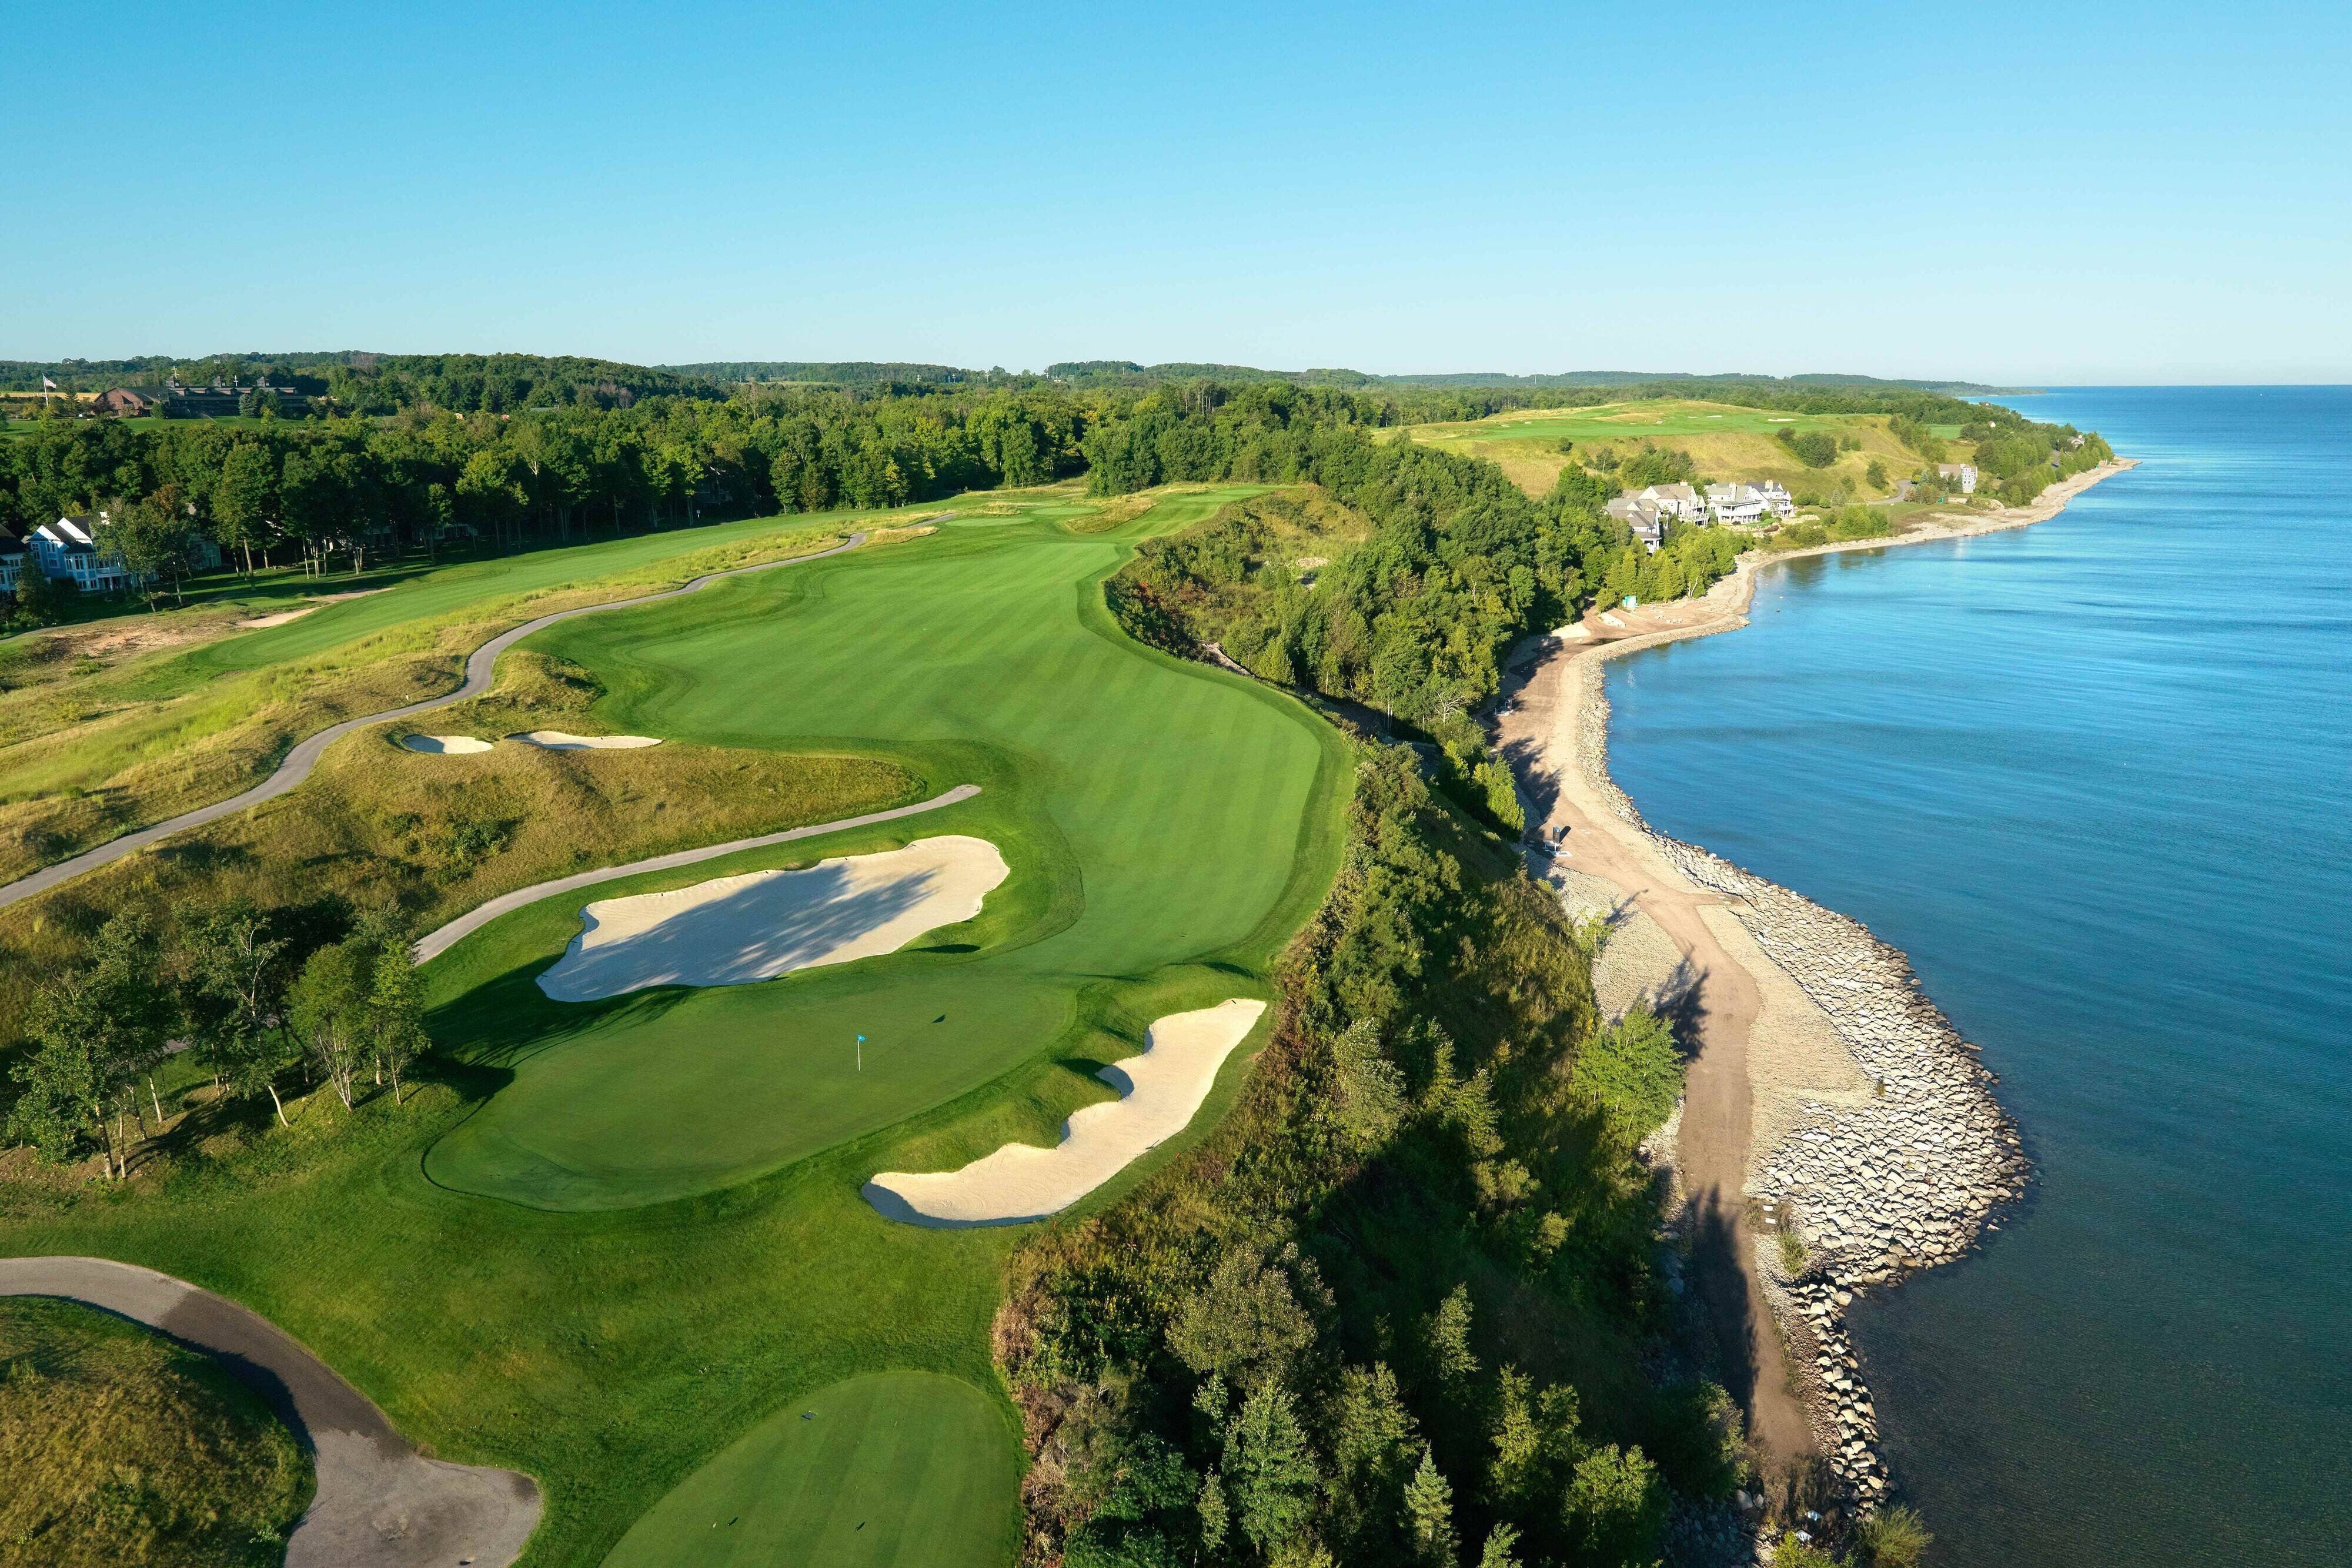 Bay Harbor Golf Club offers Lake Michigan golf at it's finest